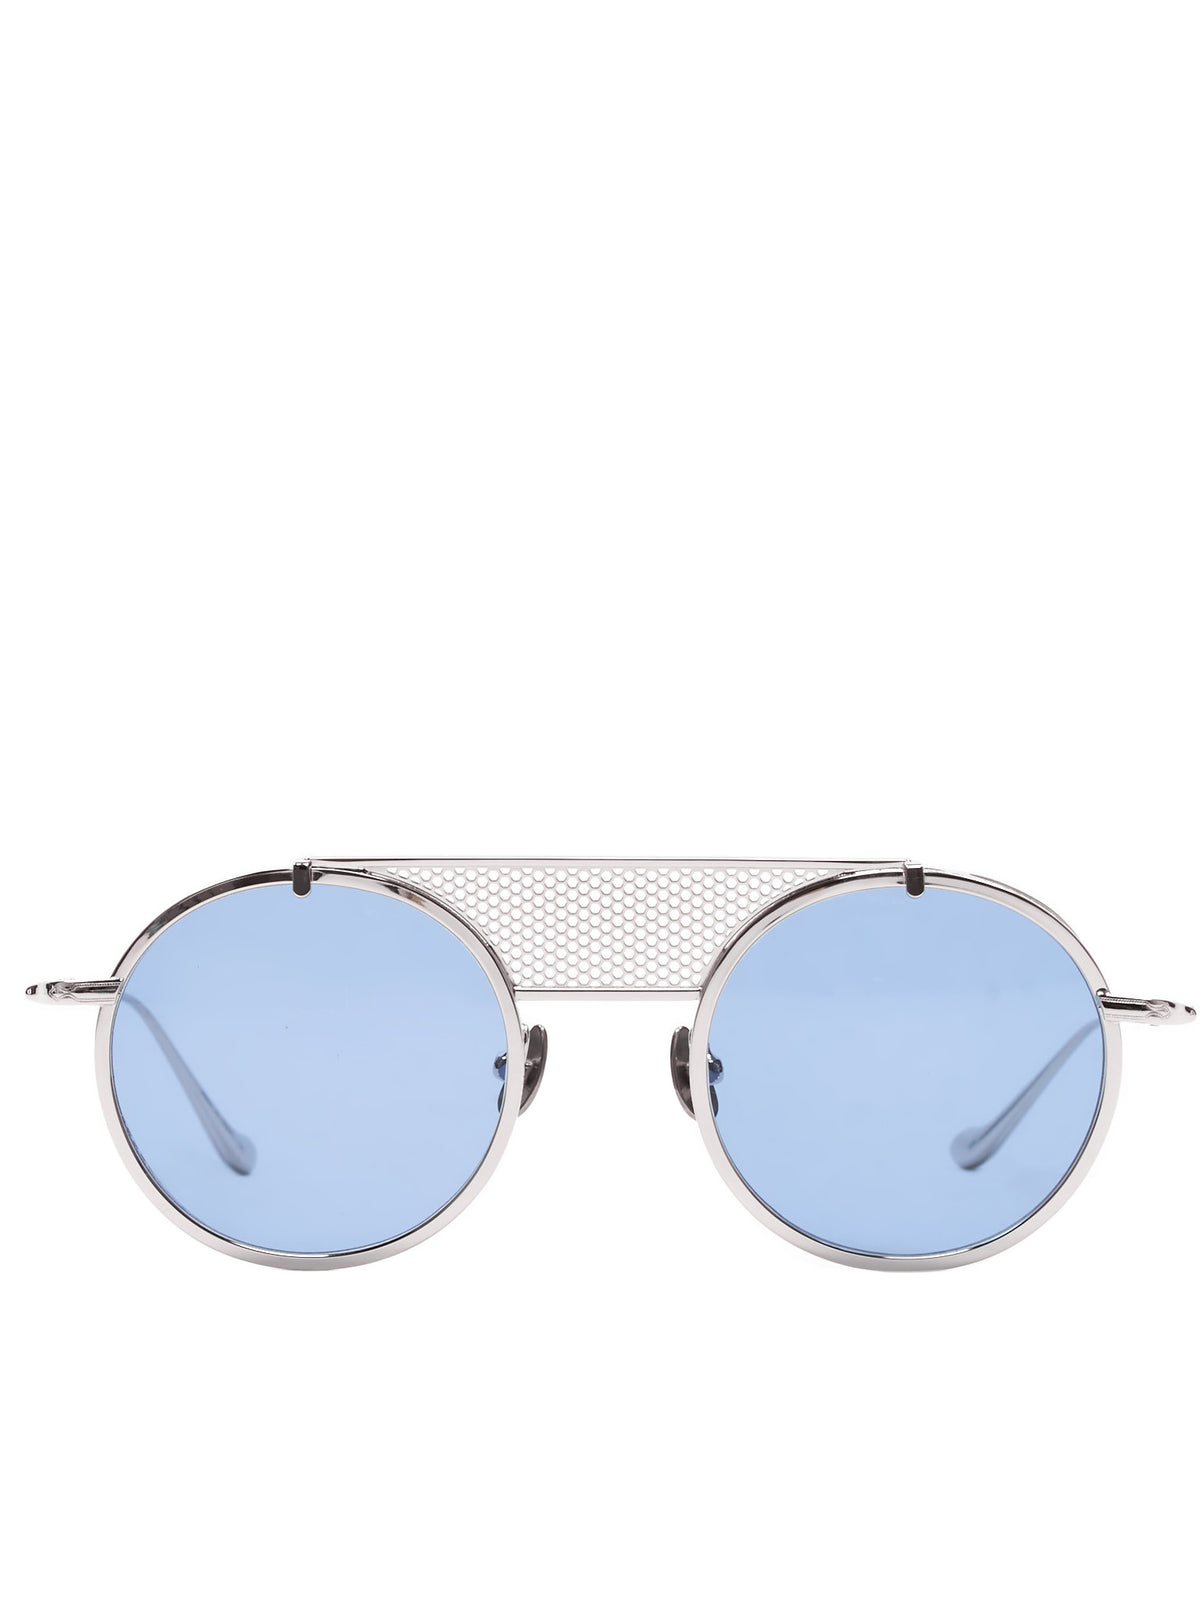 Matsuda Sunglasses | H.Lorenzo Front